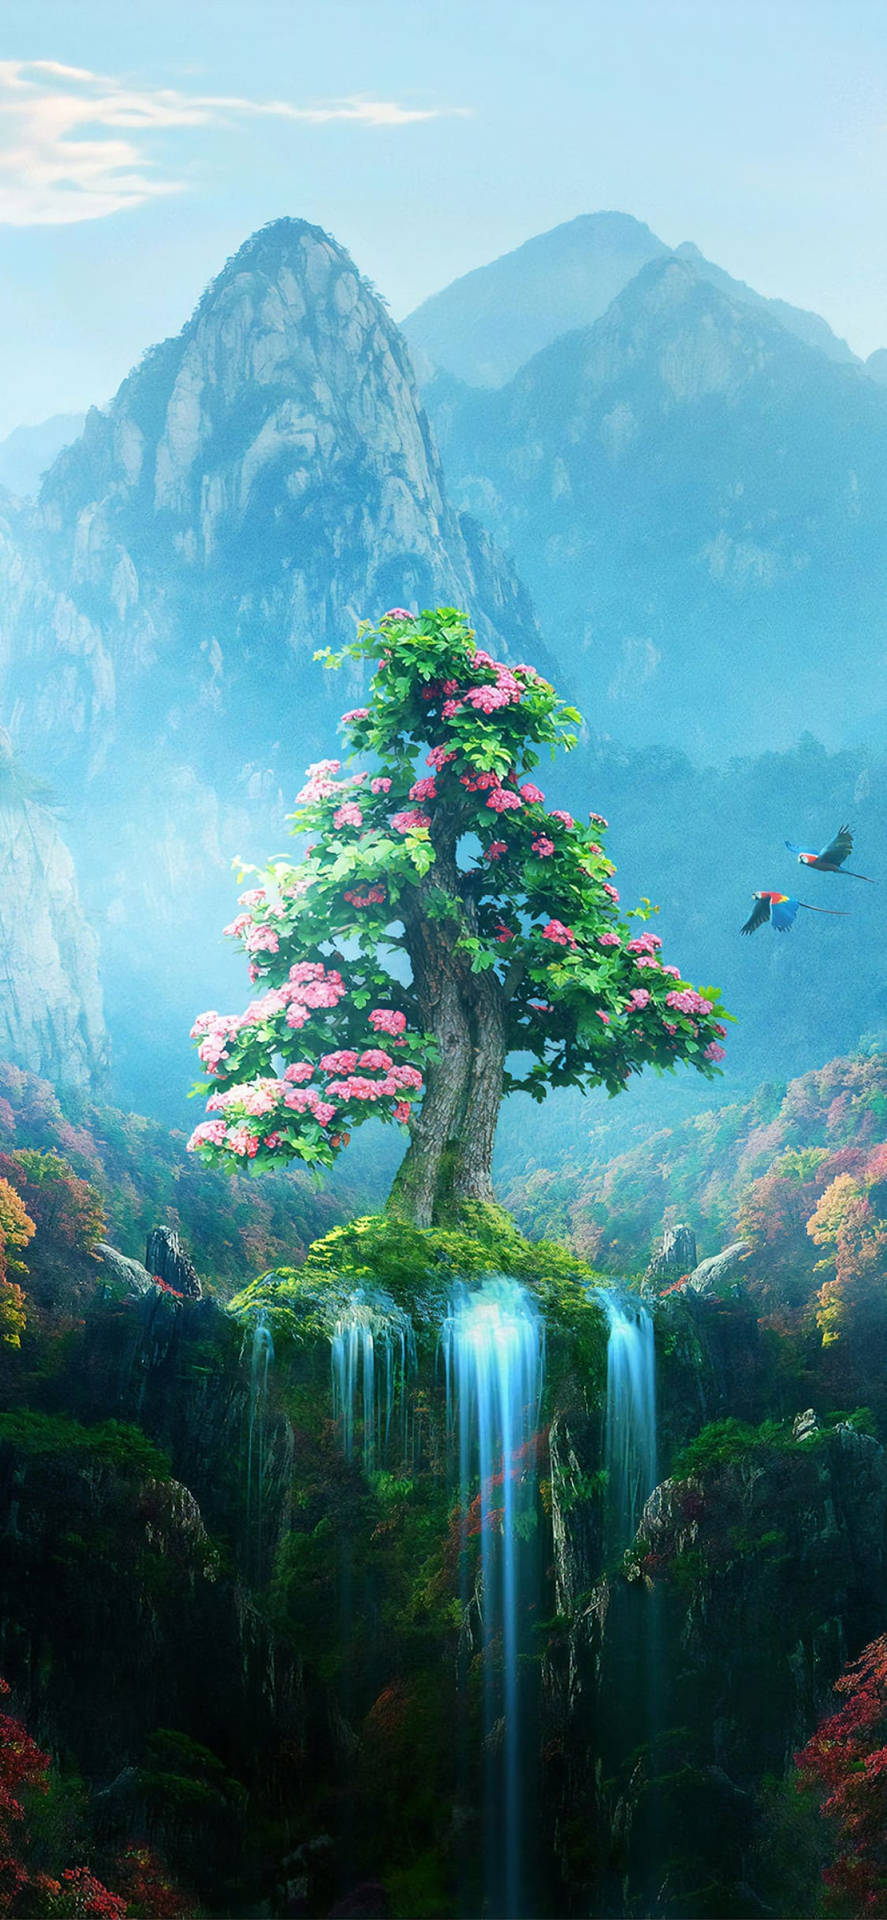 Explore an idyllic pixel nature setting Wallpaper